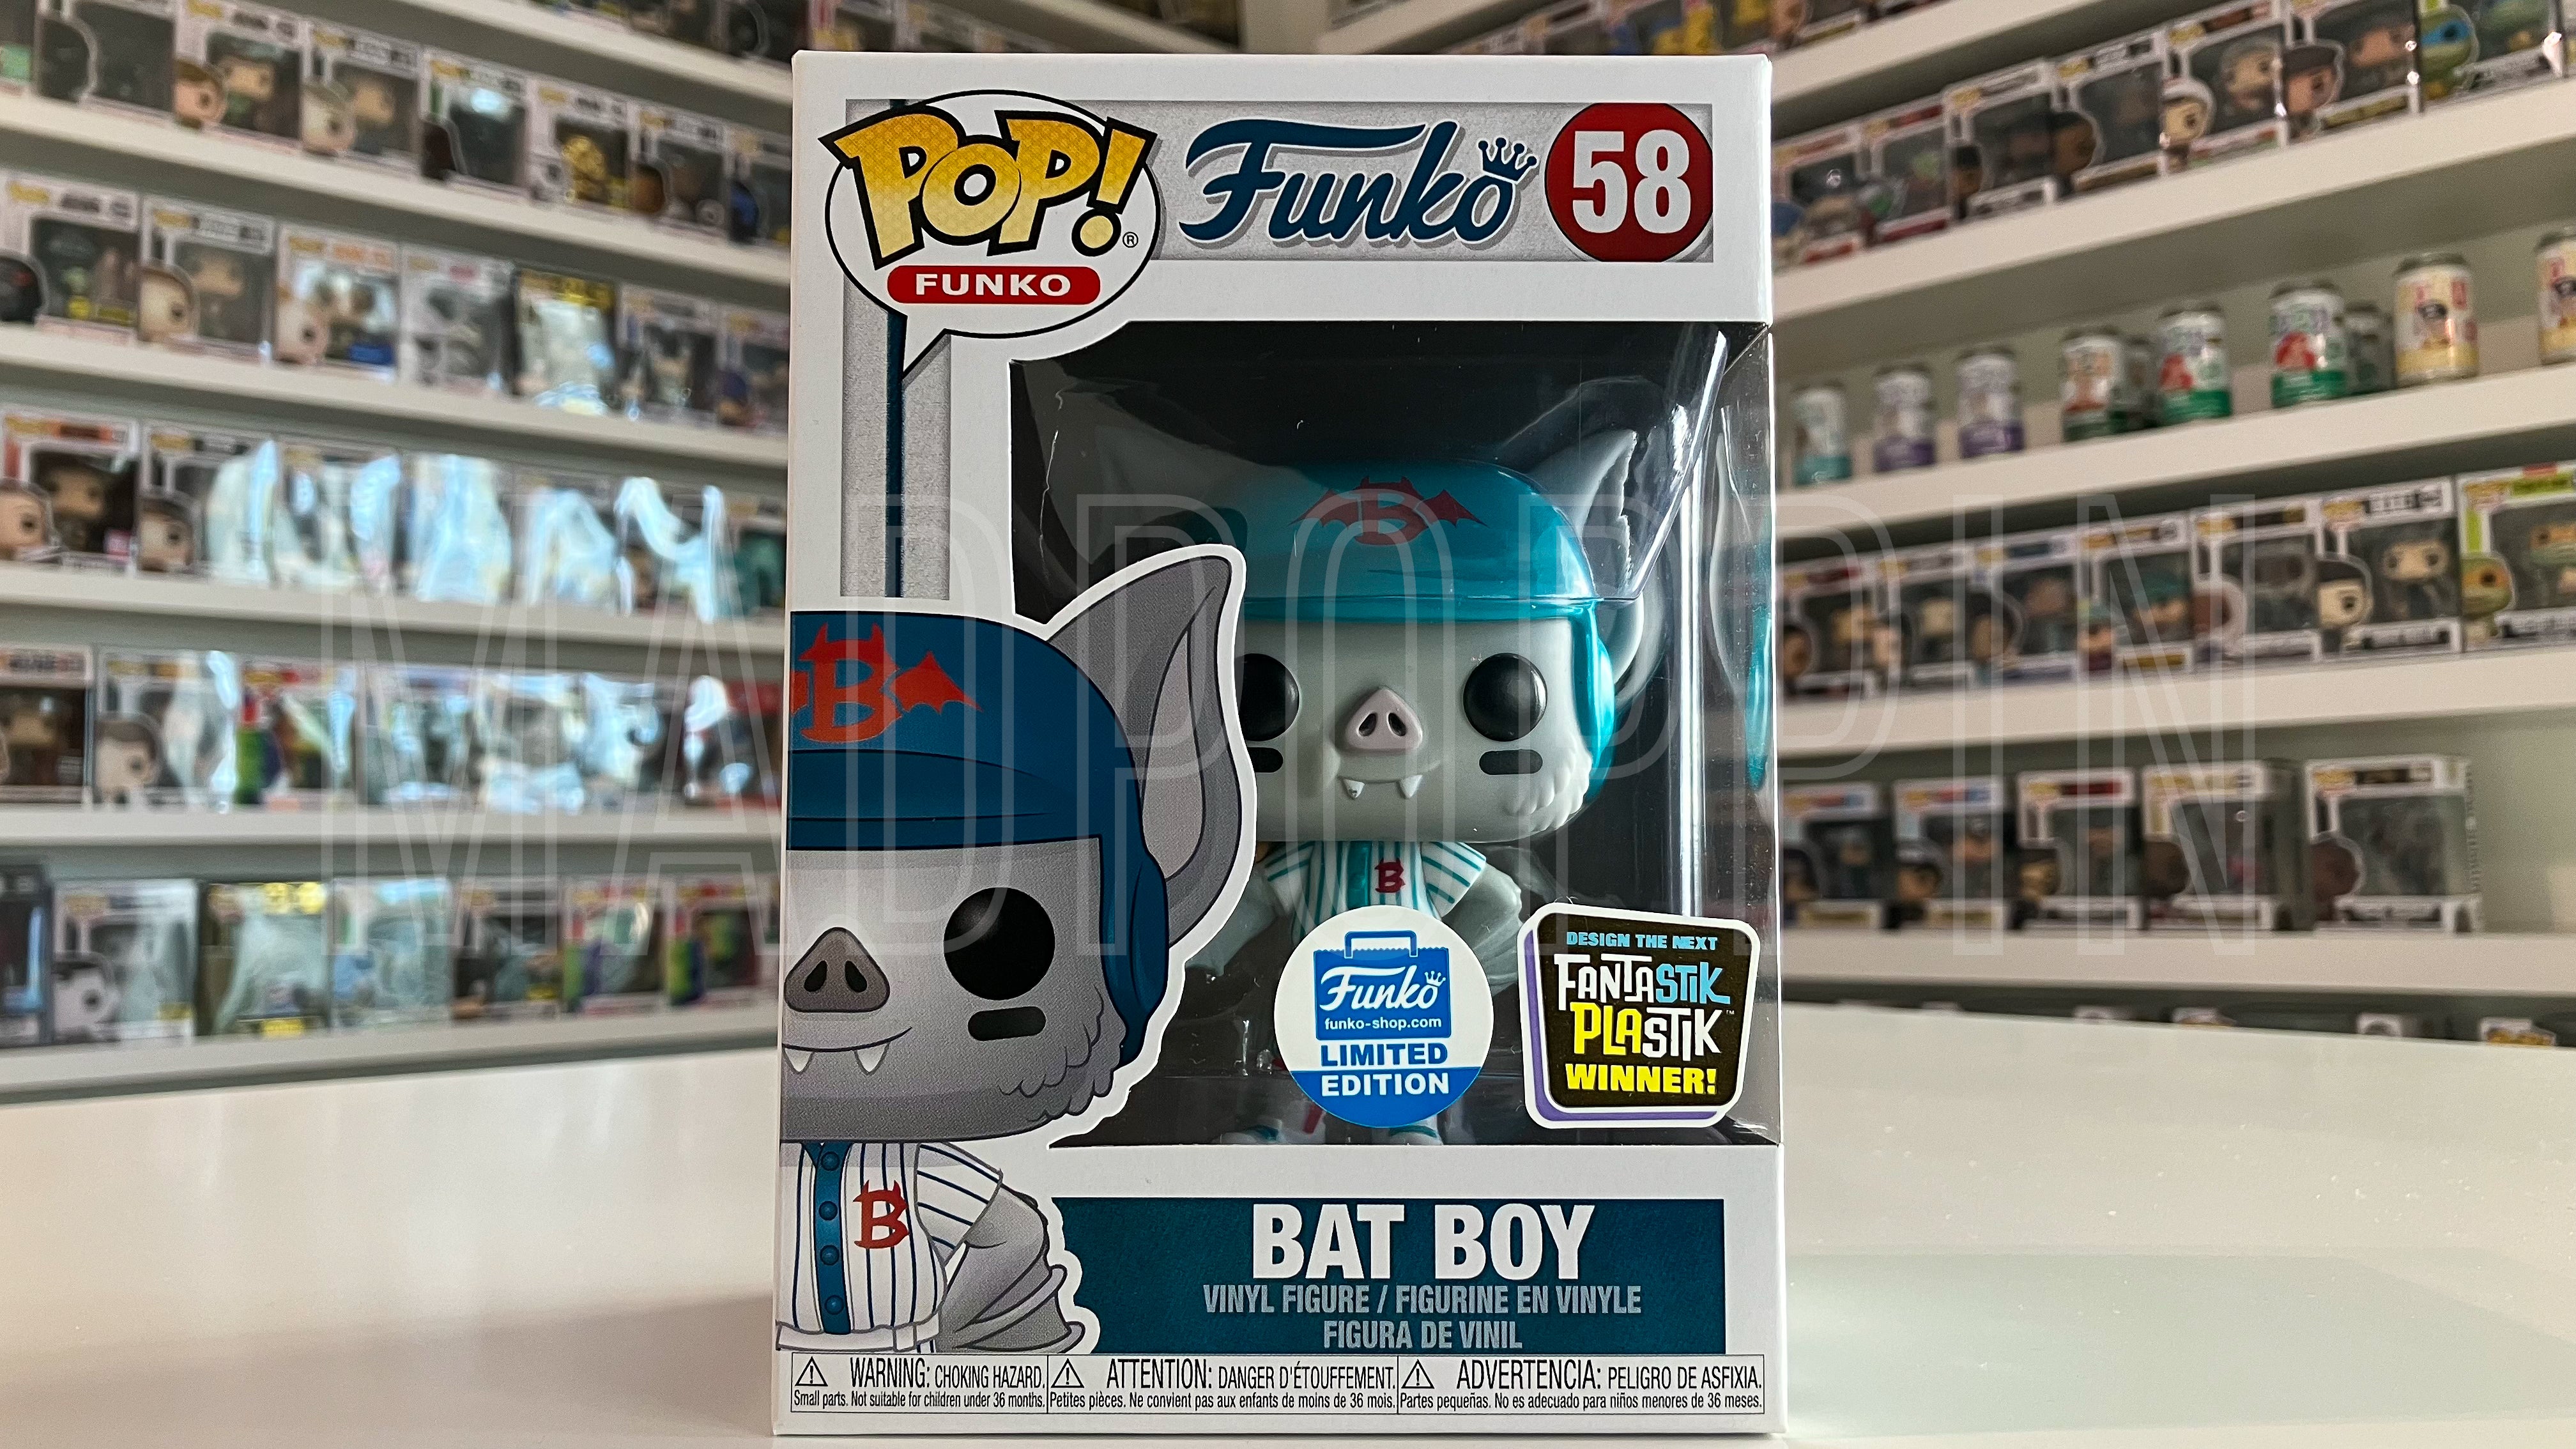 Funko Pop Bat Boy Funko-shop.com Design The Next Fantasik Plastik Winner! 58